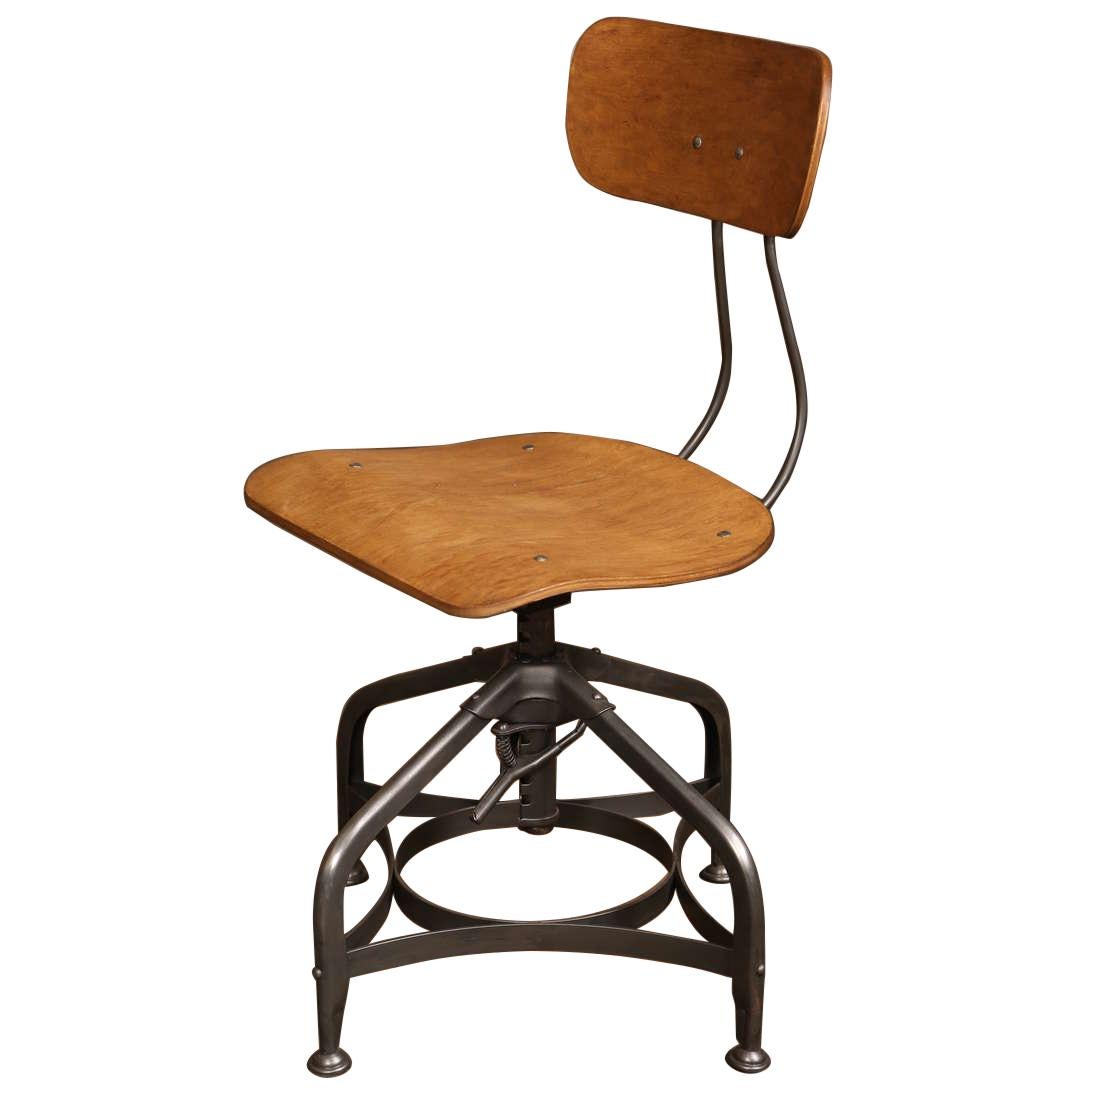 Original Toledo Bent Plywood Adjustable Swivel Side Chair For Sale